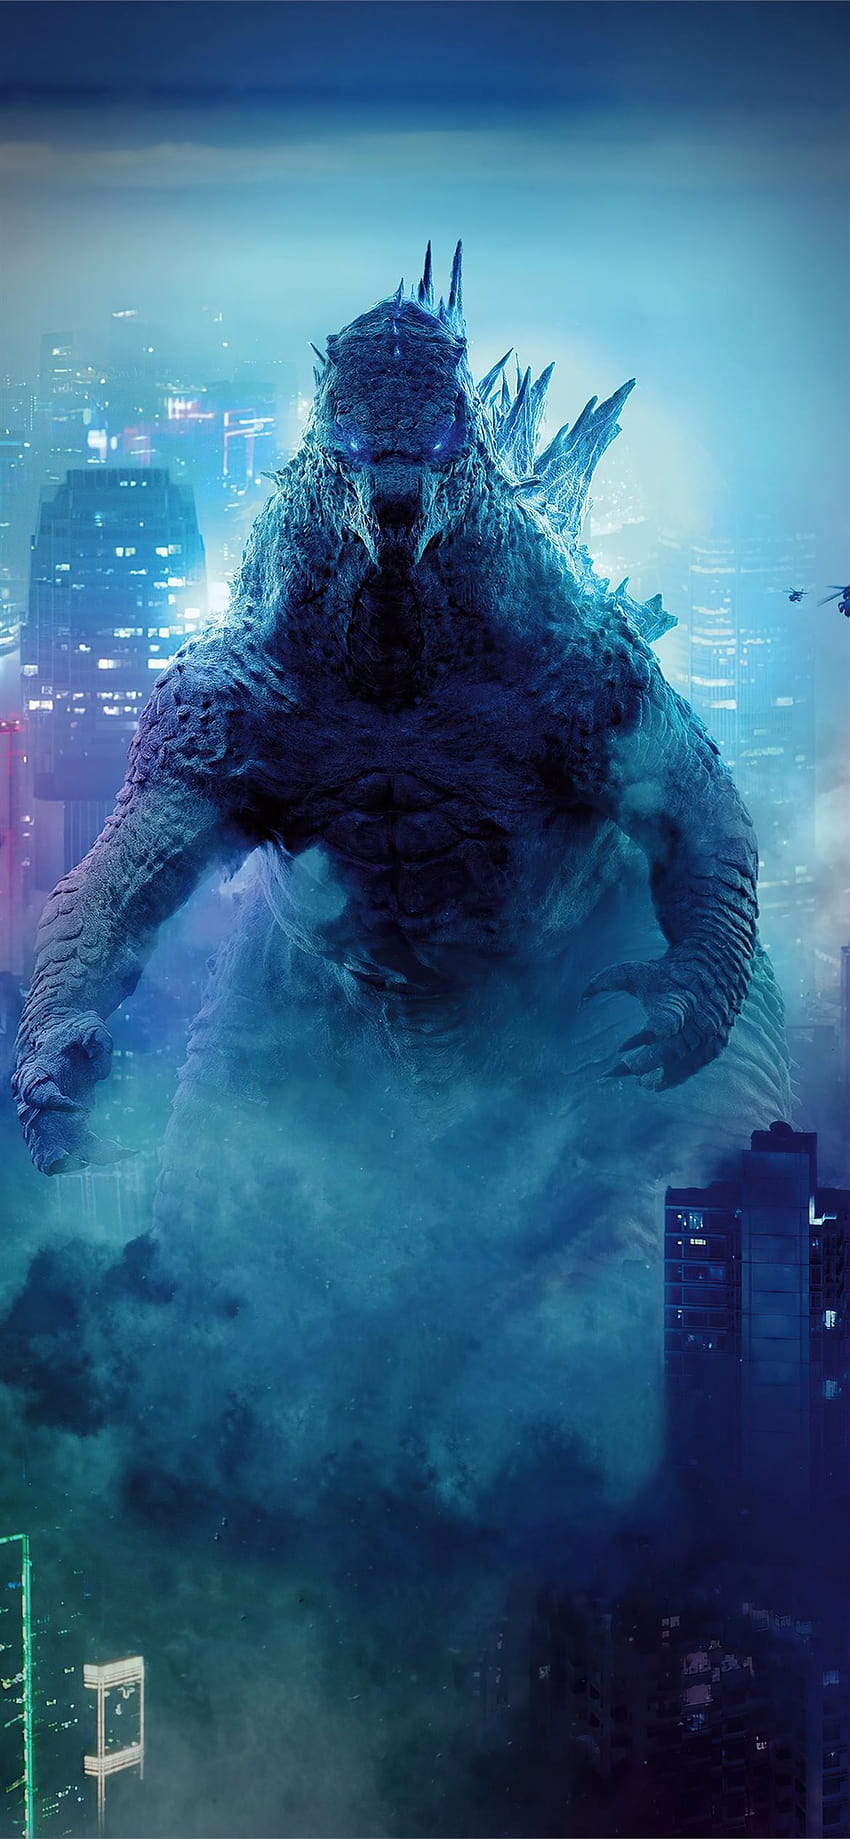 Mejor Godzilla vs kong iPhone 12, king kong vs godzilla iphone fondo de pantalla del teléfono